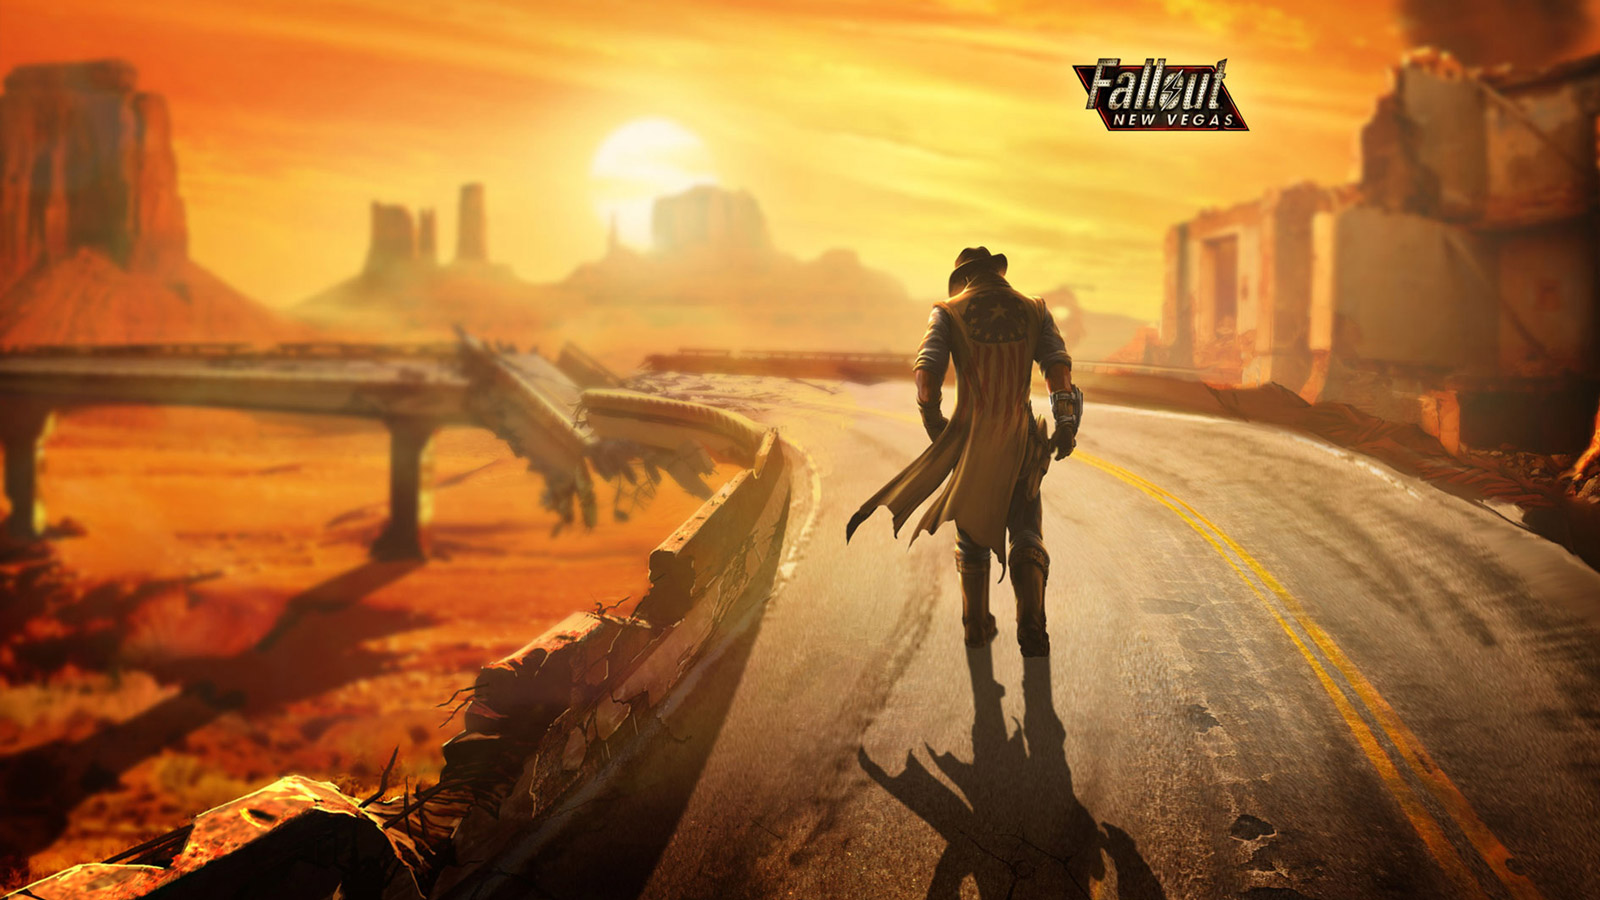 Fallout New Vegas Wallpaper In